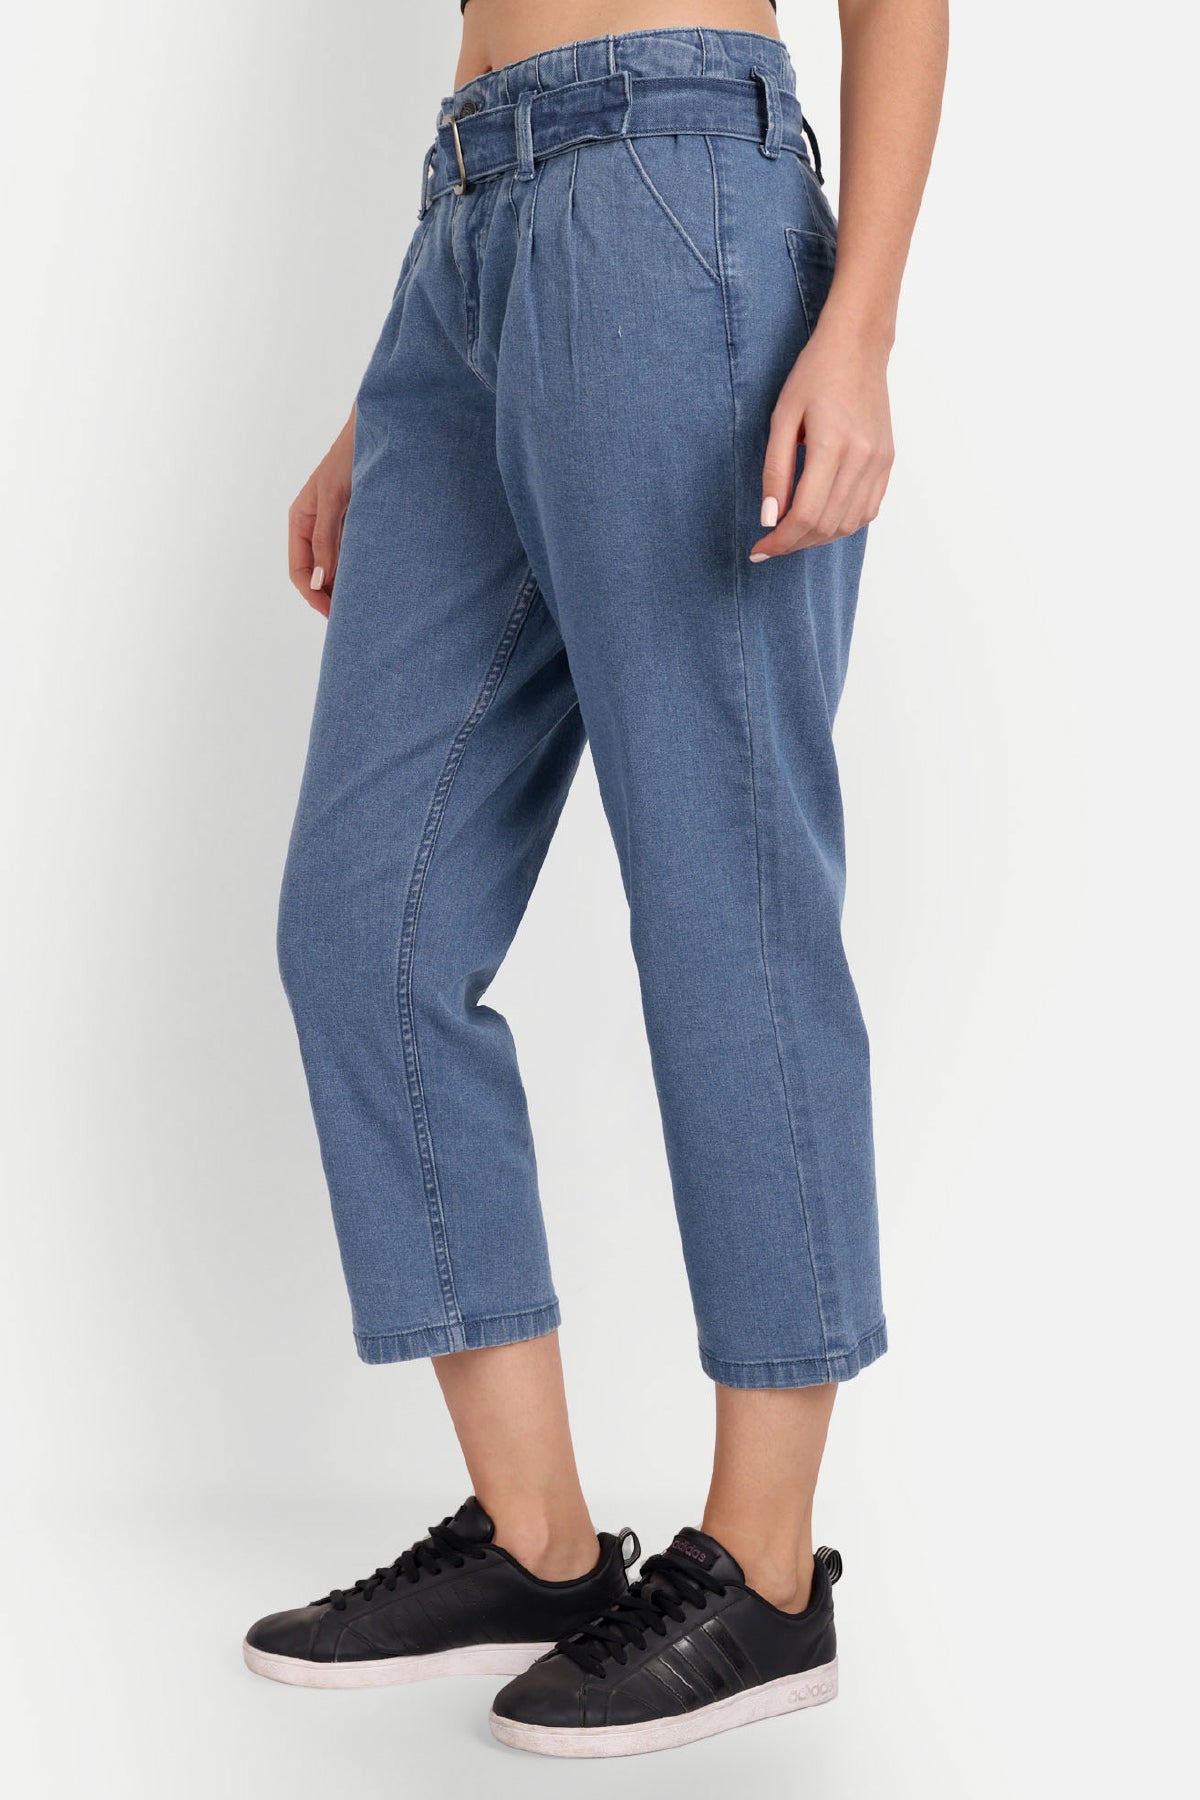 SHEIN Frenchy Plus Paperbag Waist Capri Jeans | SHEIN USA